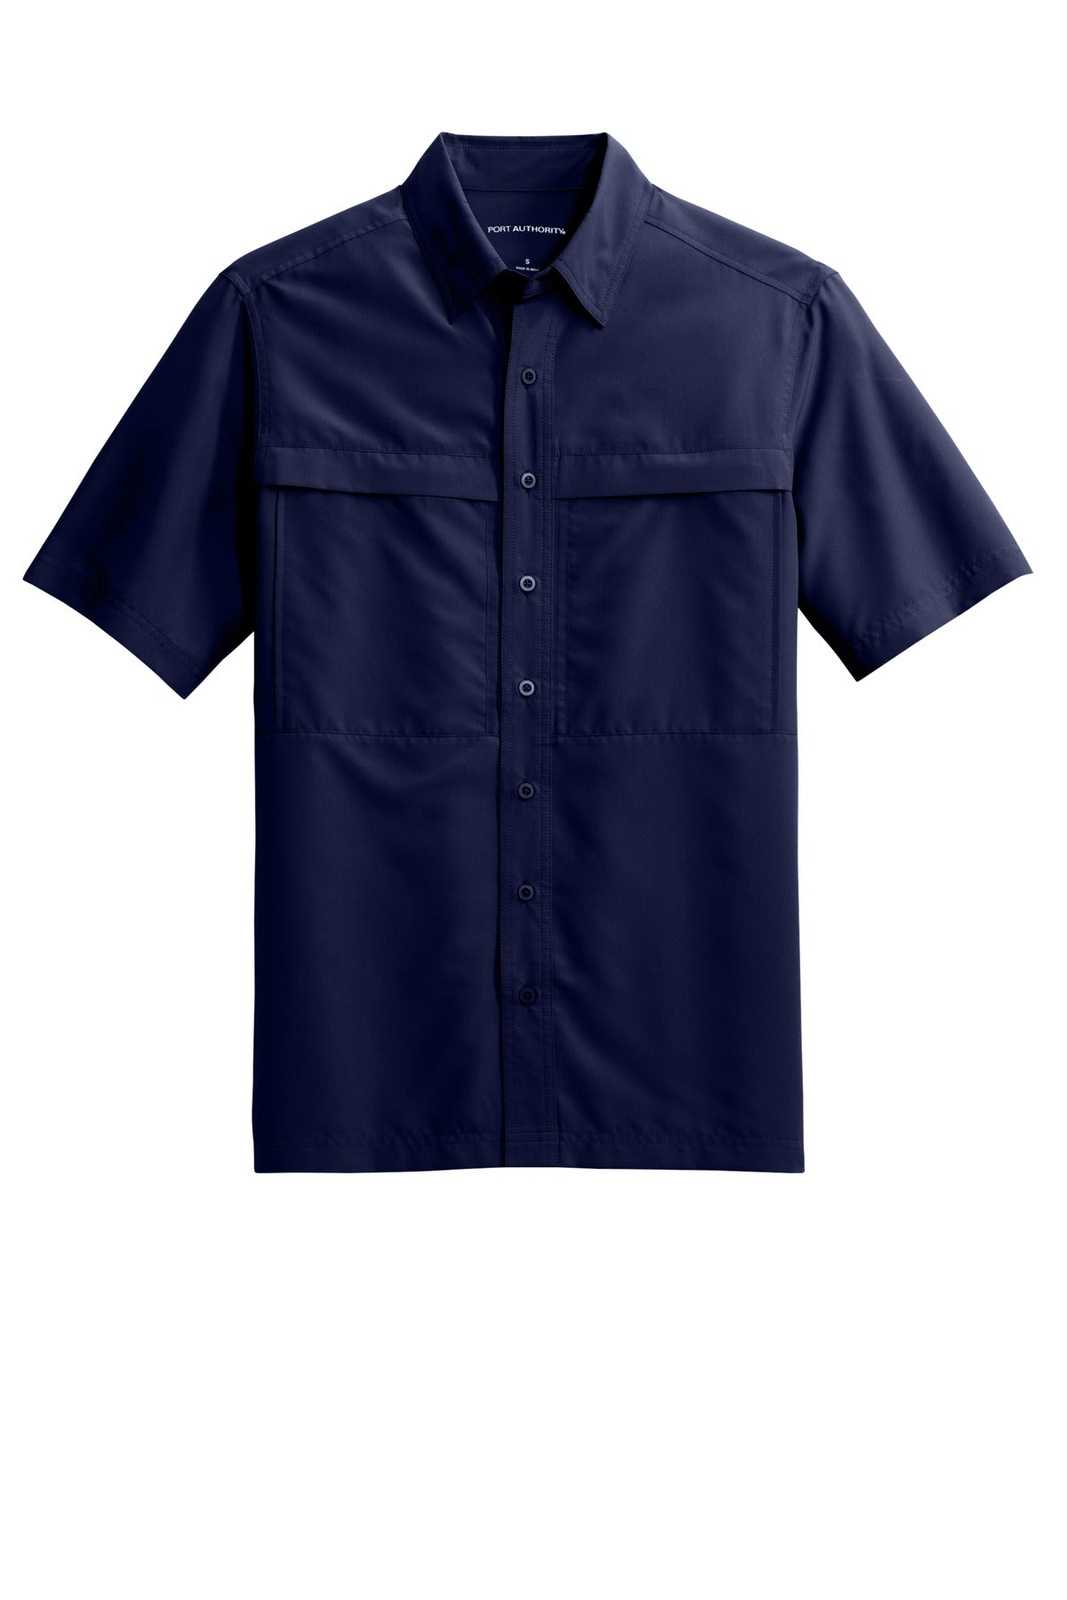 Port Authority W961 Short Sleeve UV Daybreak Shirt - True Navy - HIT a Double - 1